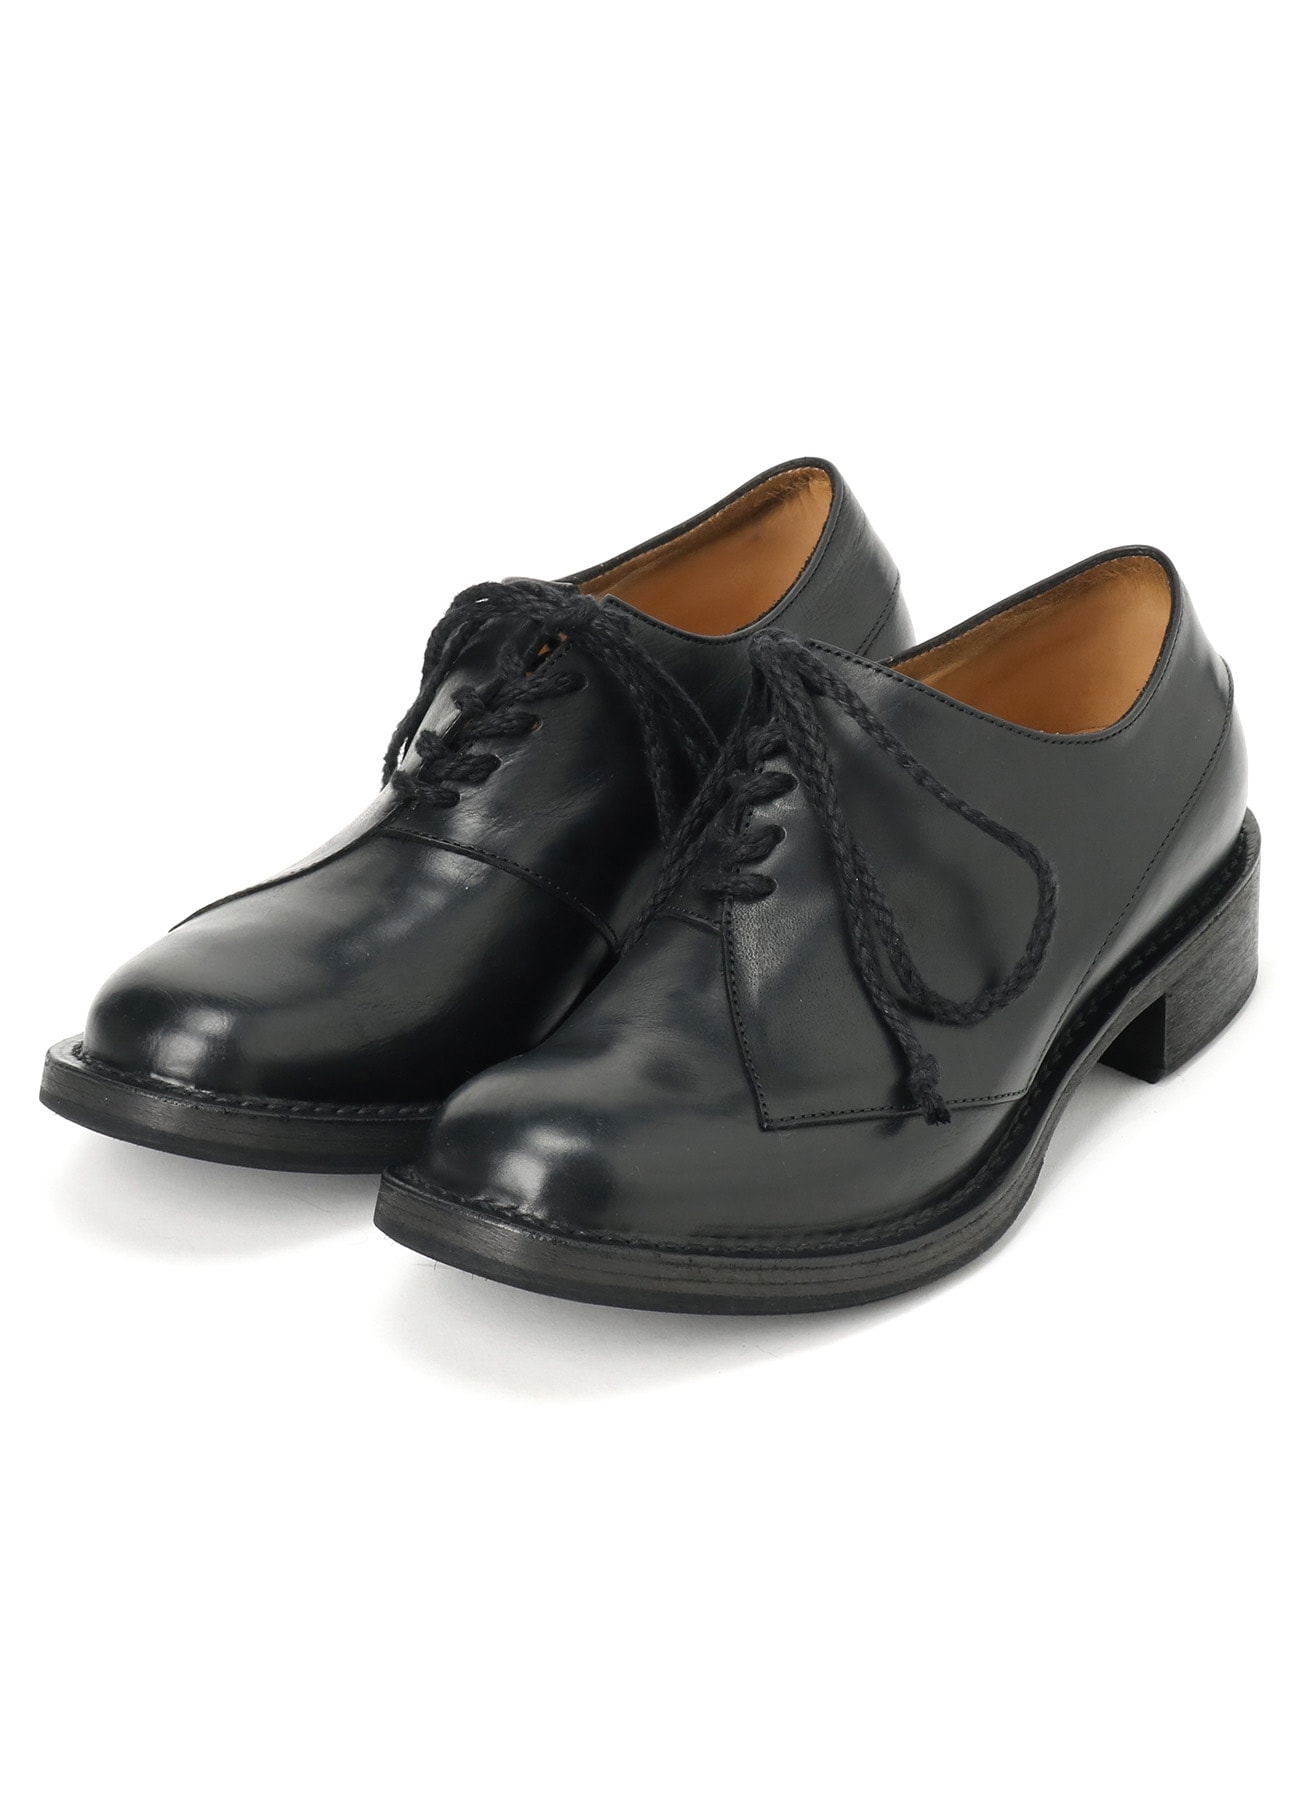 Cowhide Retro Casual Tassel Flat Shoes | Tassel flats, Tassel shoes, Shoes  flats